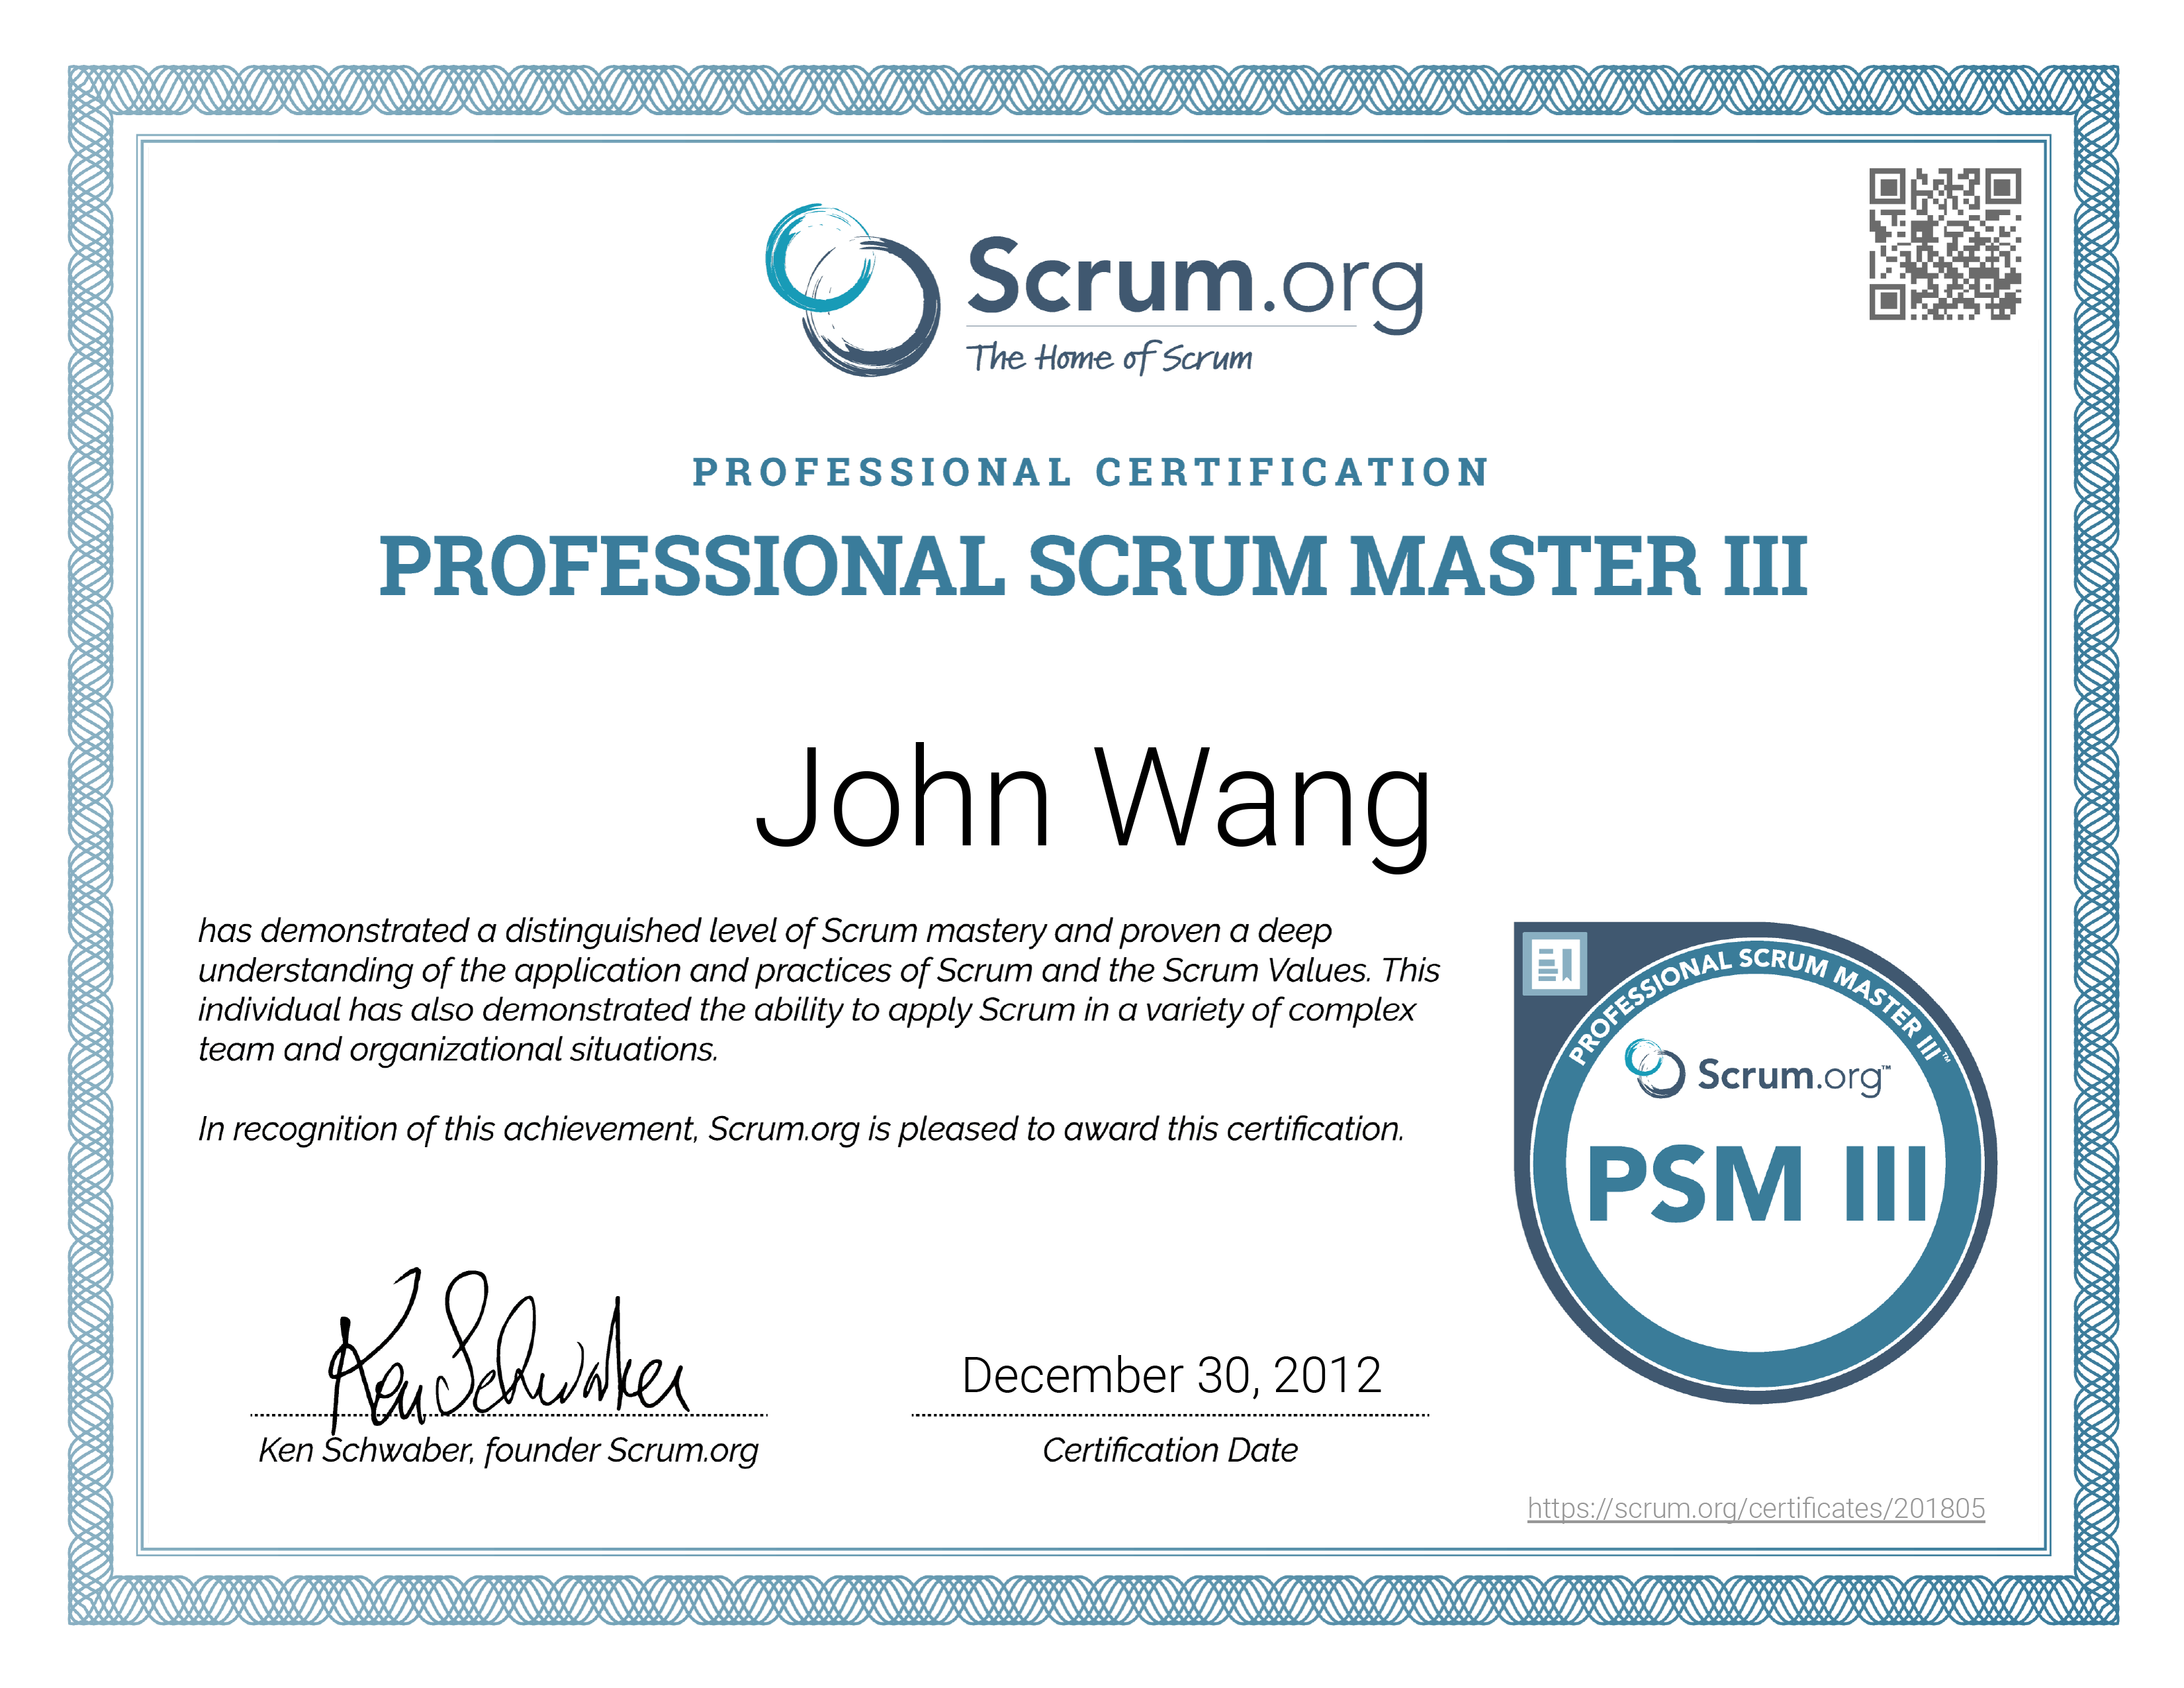 John's Professional Scrum Master III (PSM III) from Scrum.org